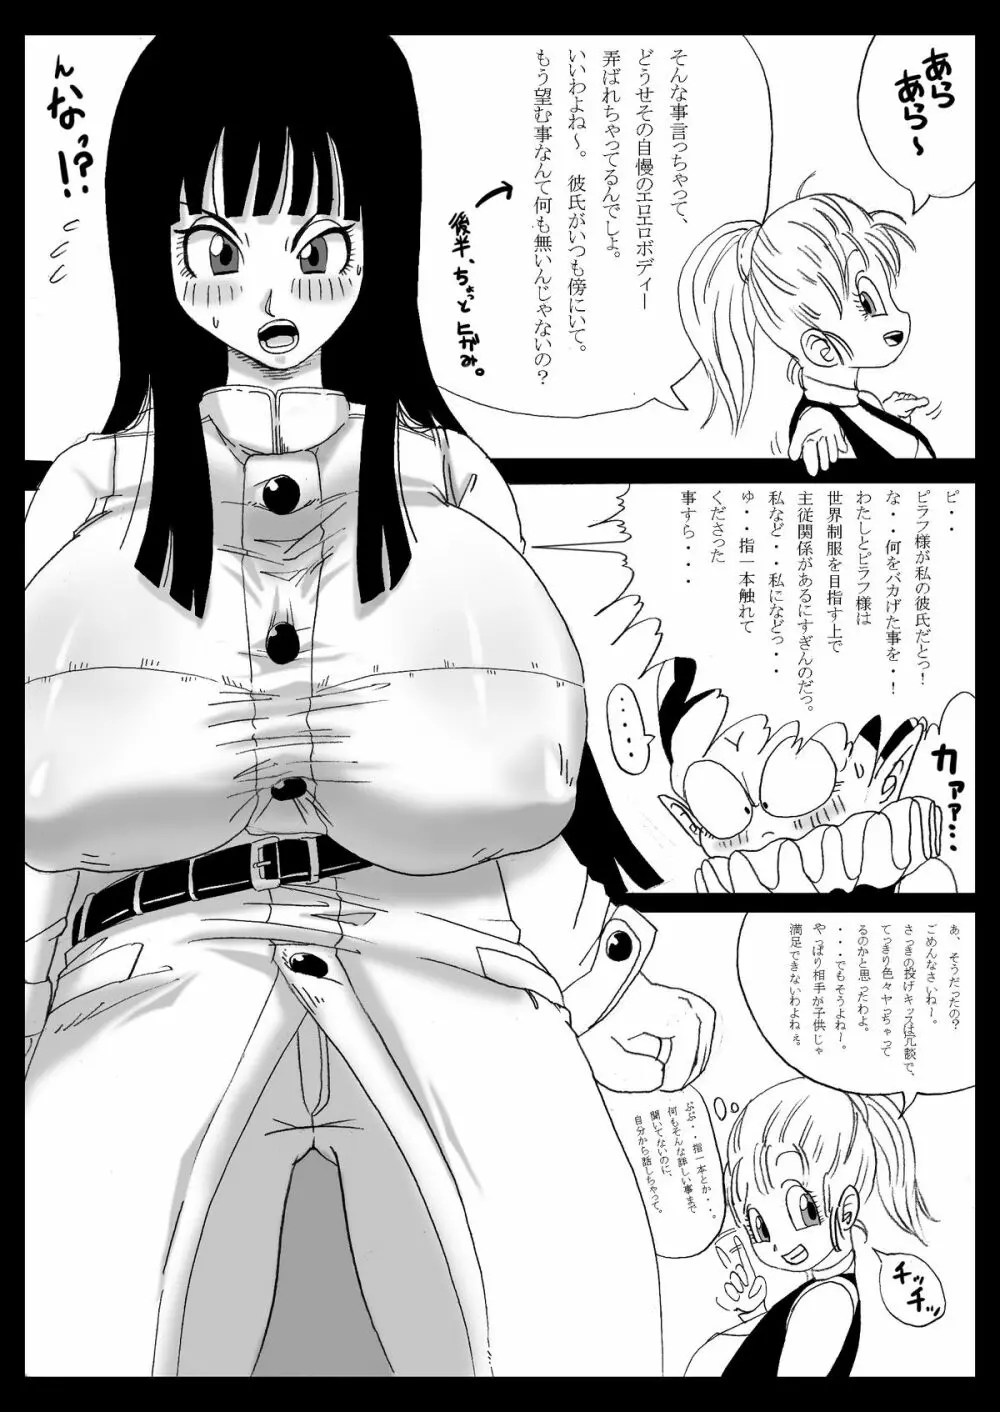 DRAGON ROAD 妄作劇場 2 - page6